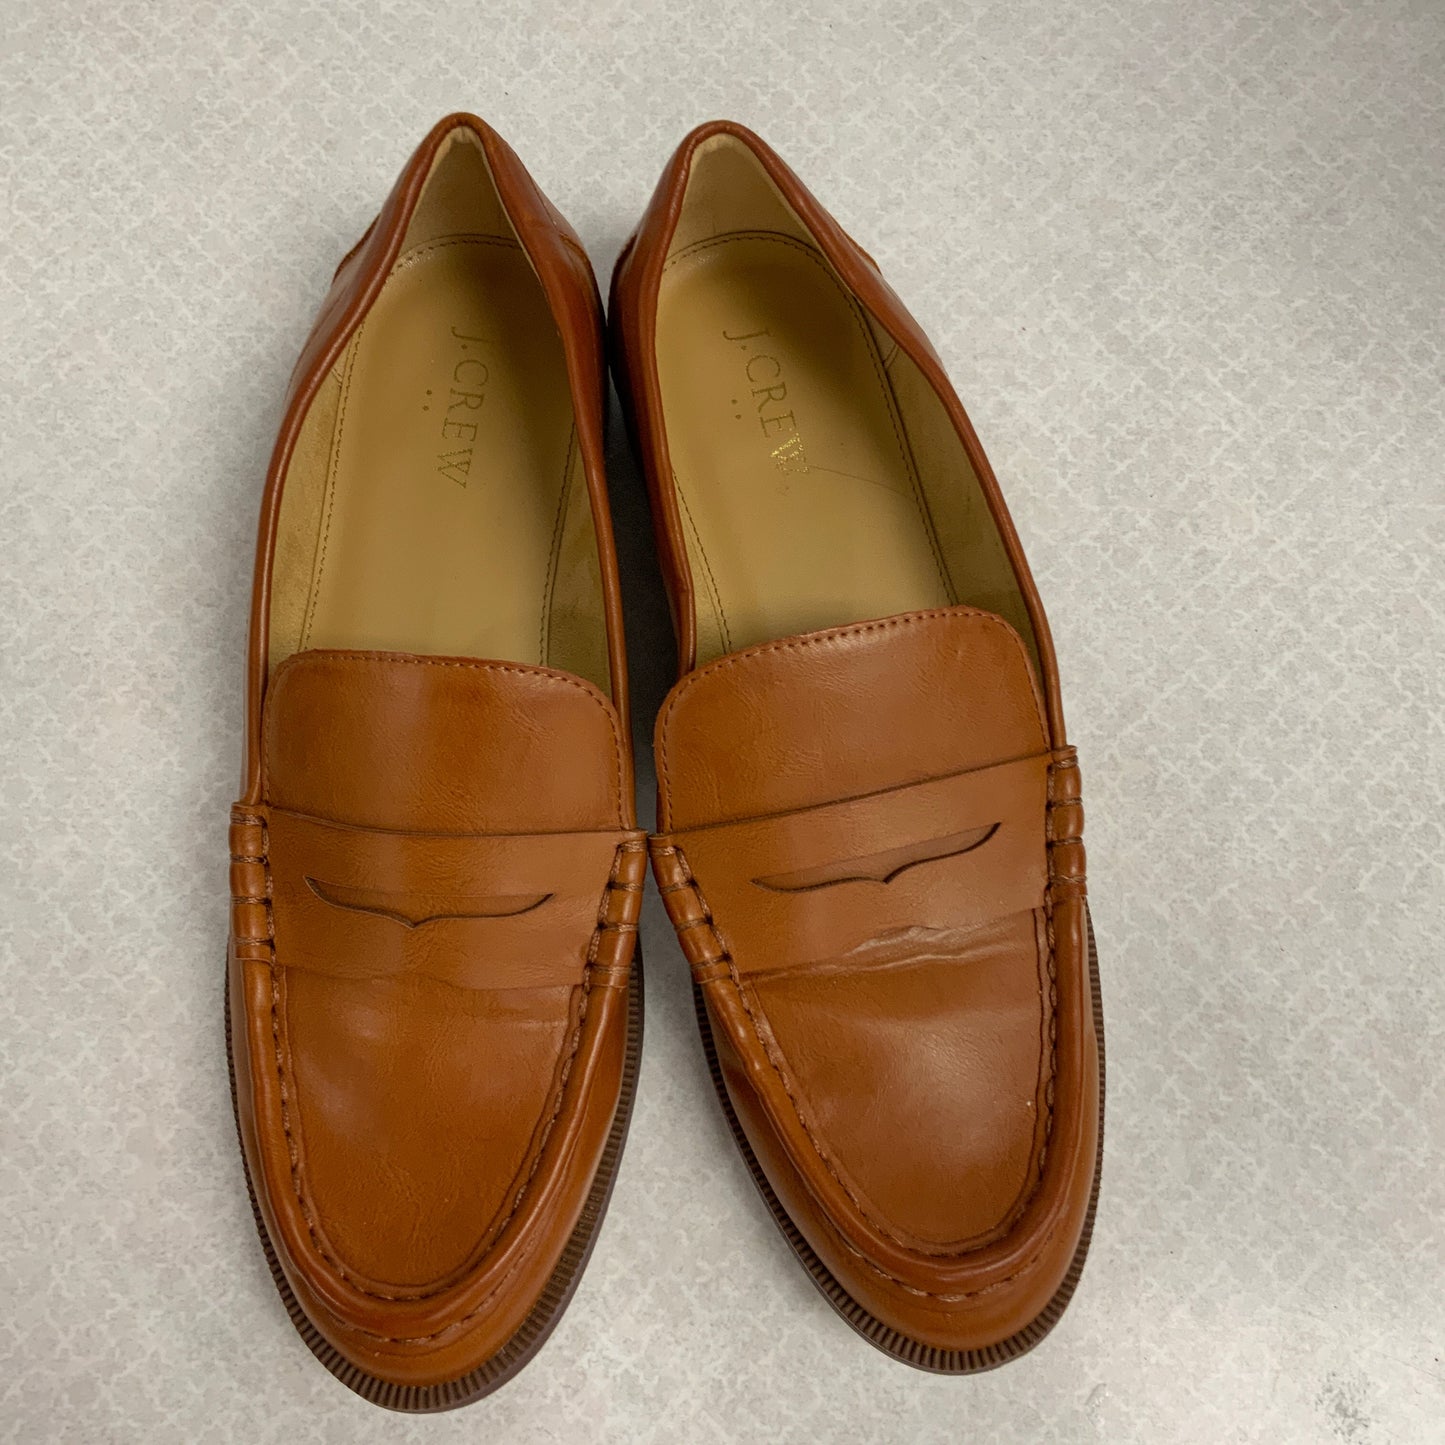 Brown Shoes Flats J. Crew, Size 8.5